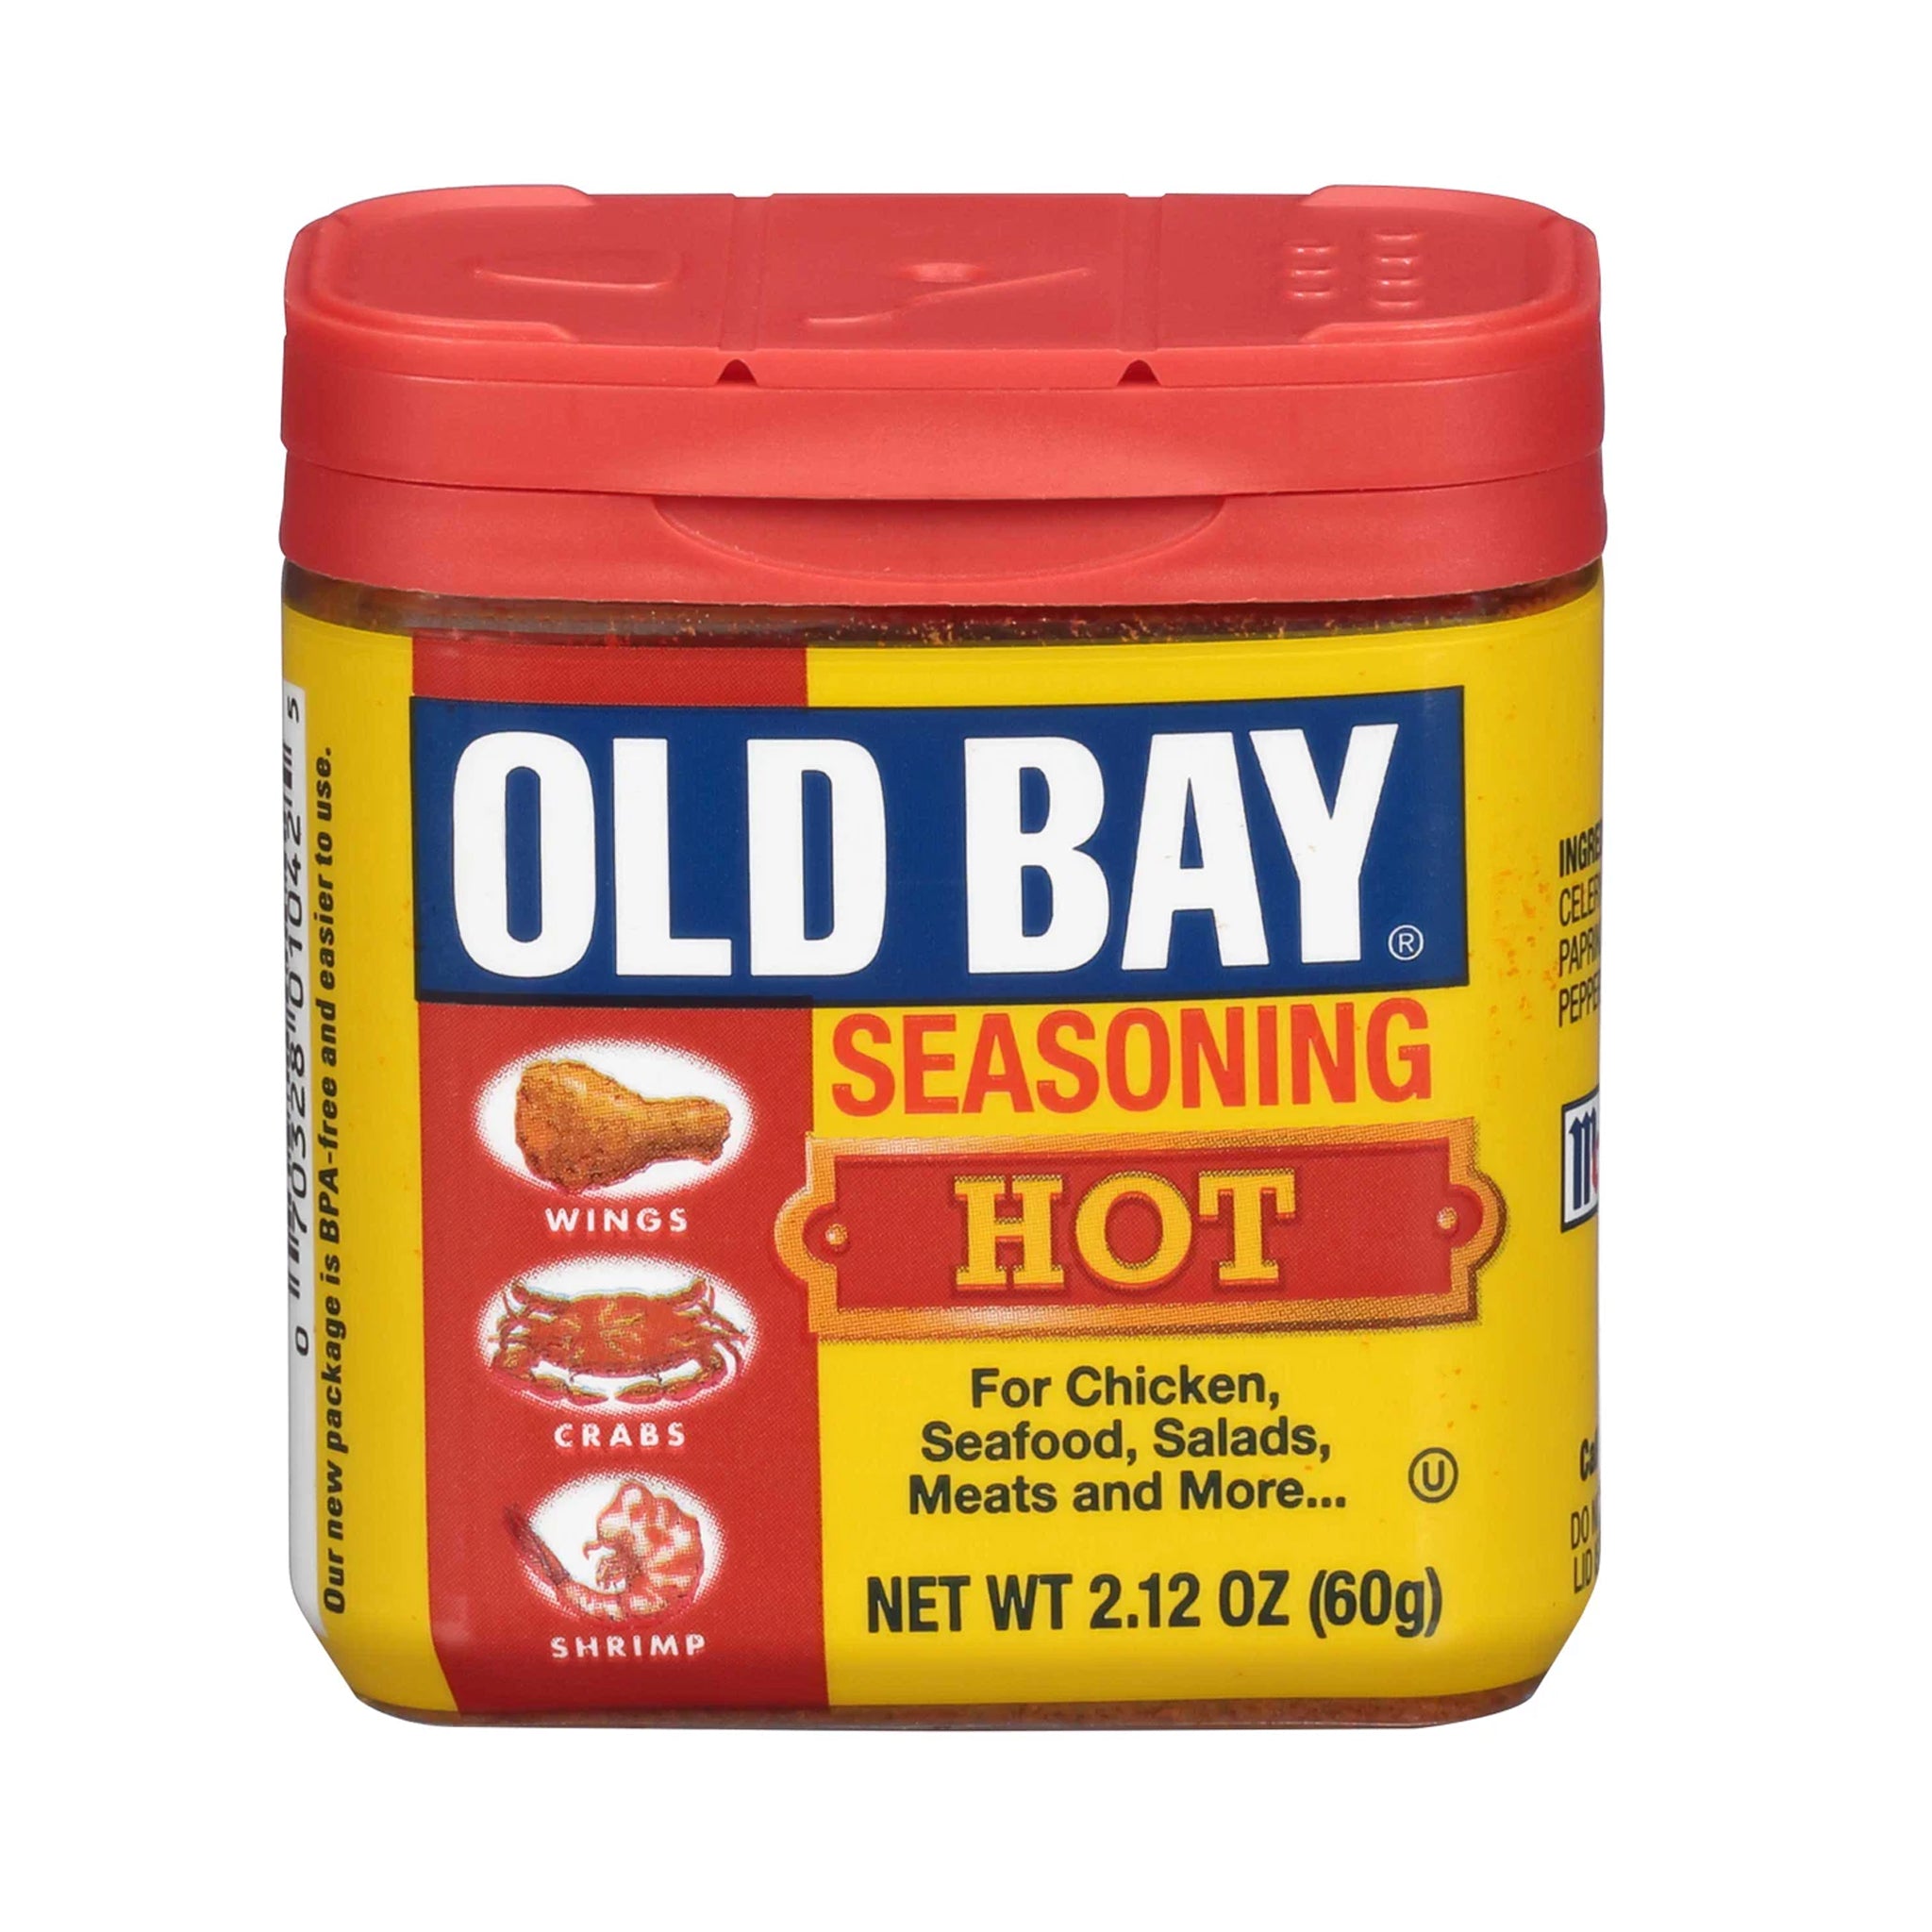 Old Bay Seasoning - 24 oz